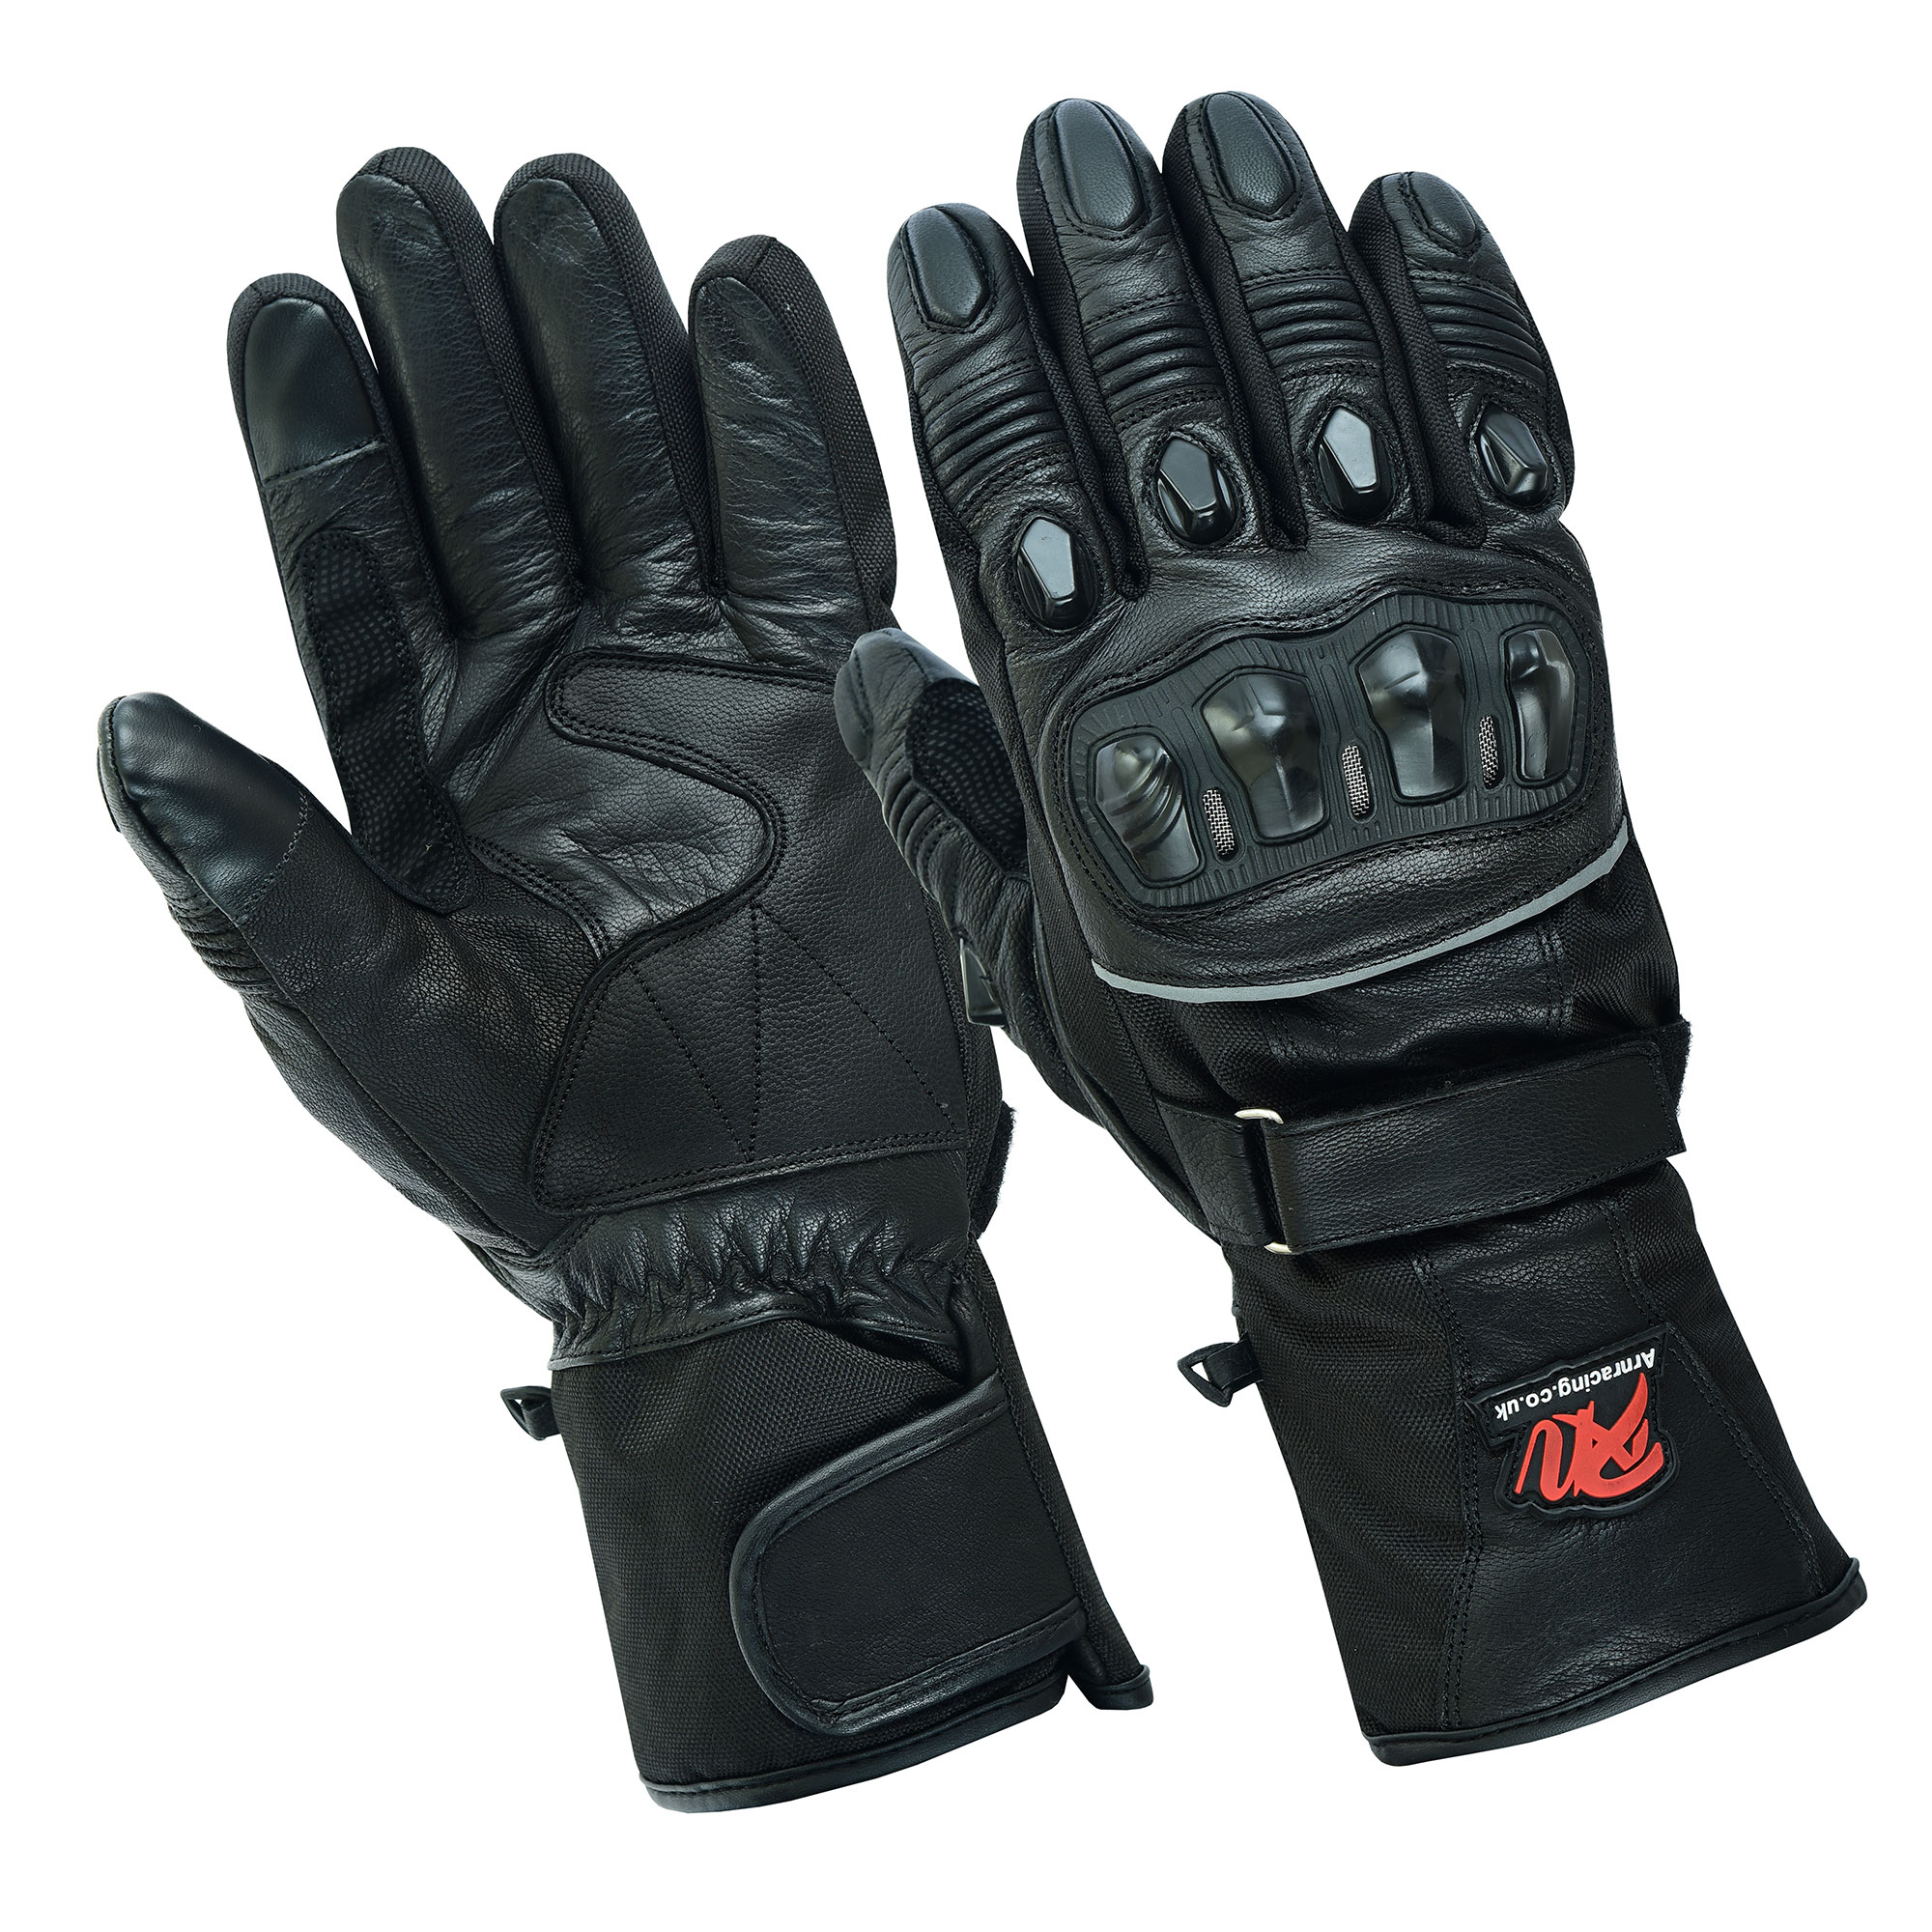 ALL SIZES Leather Motorbike Motorcycle Gloves Biker Waterproof Windproof Thermal 